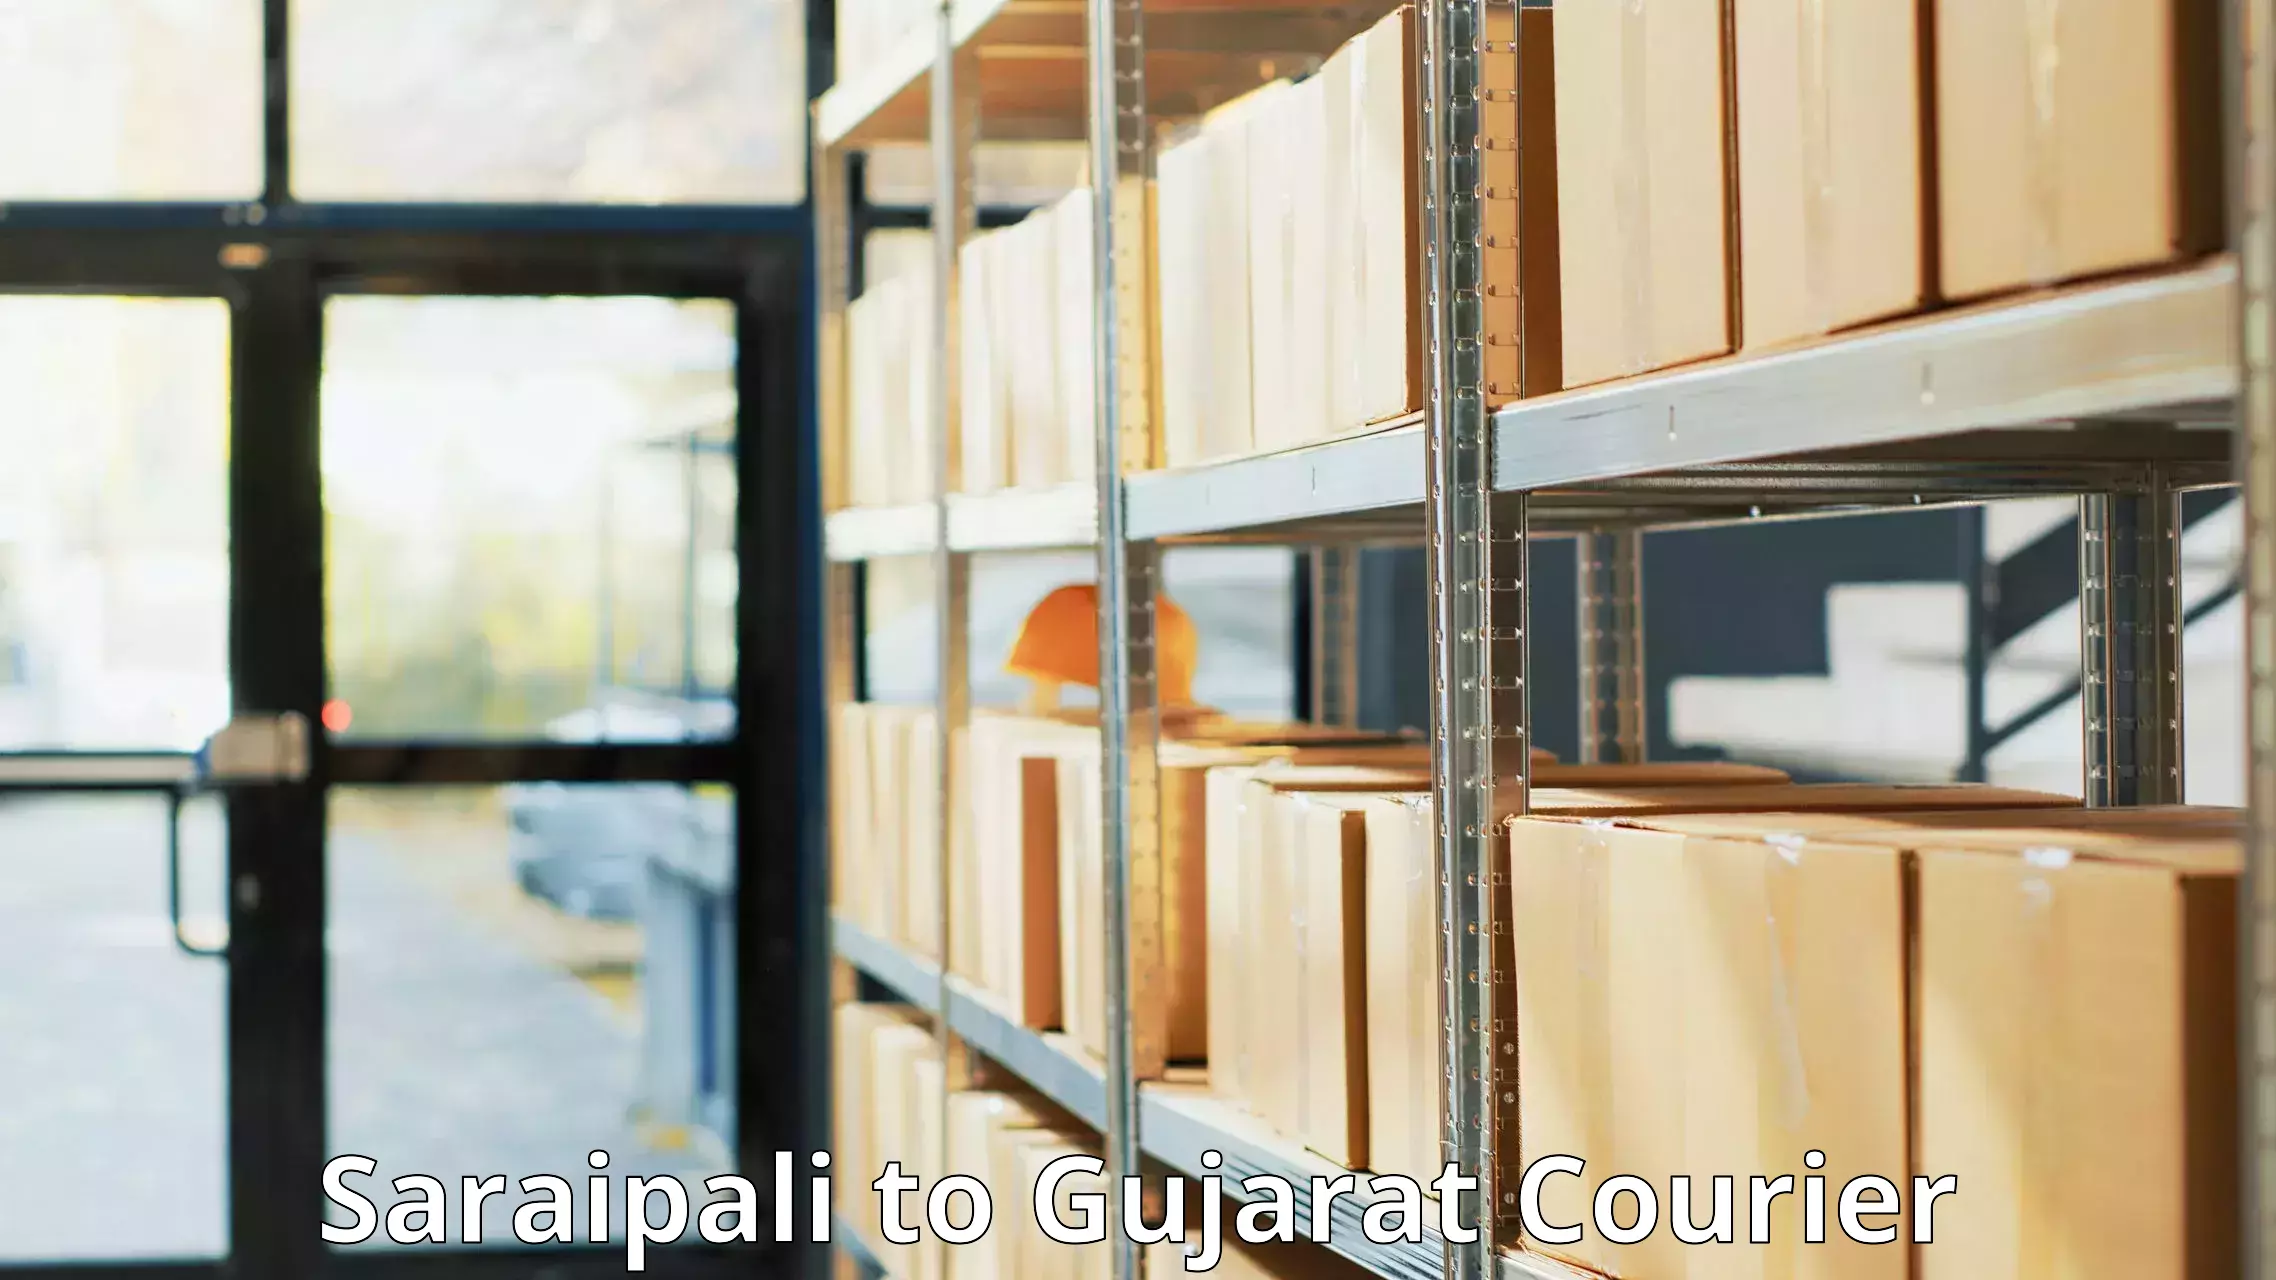 Courier service booking Saraipali to Dwarka